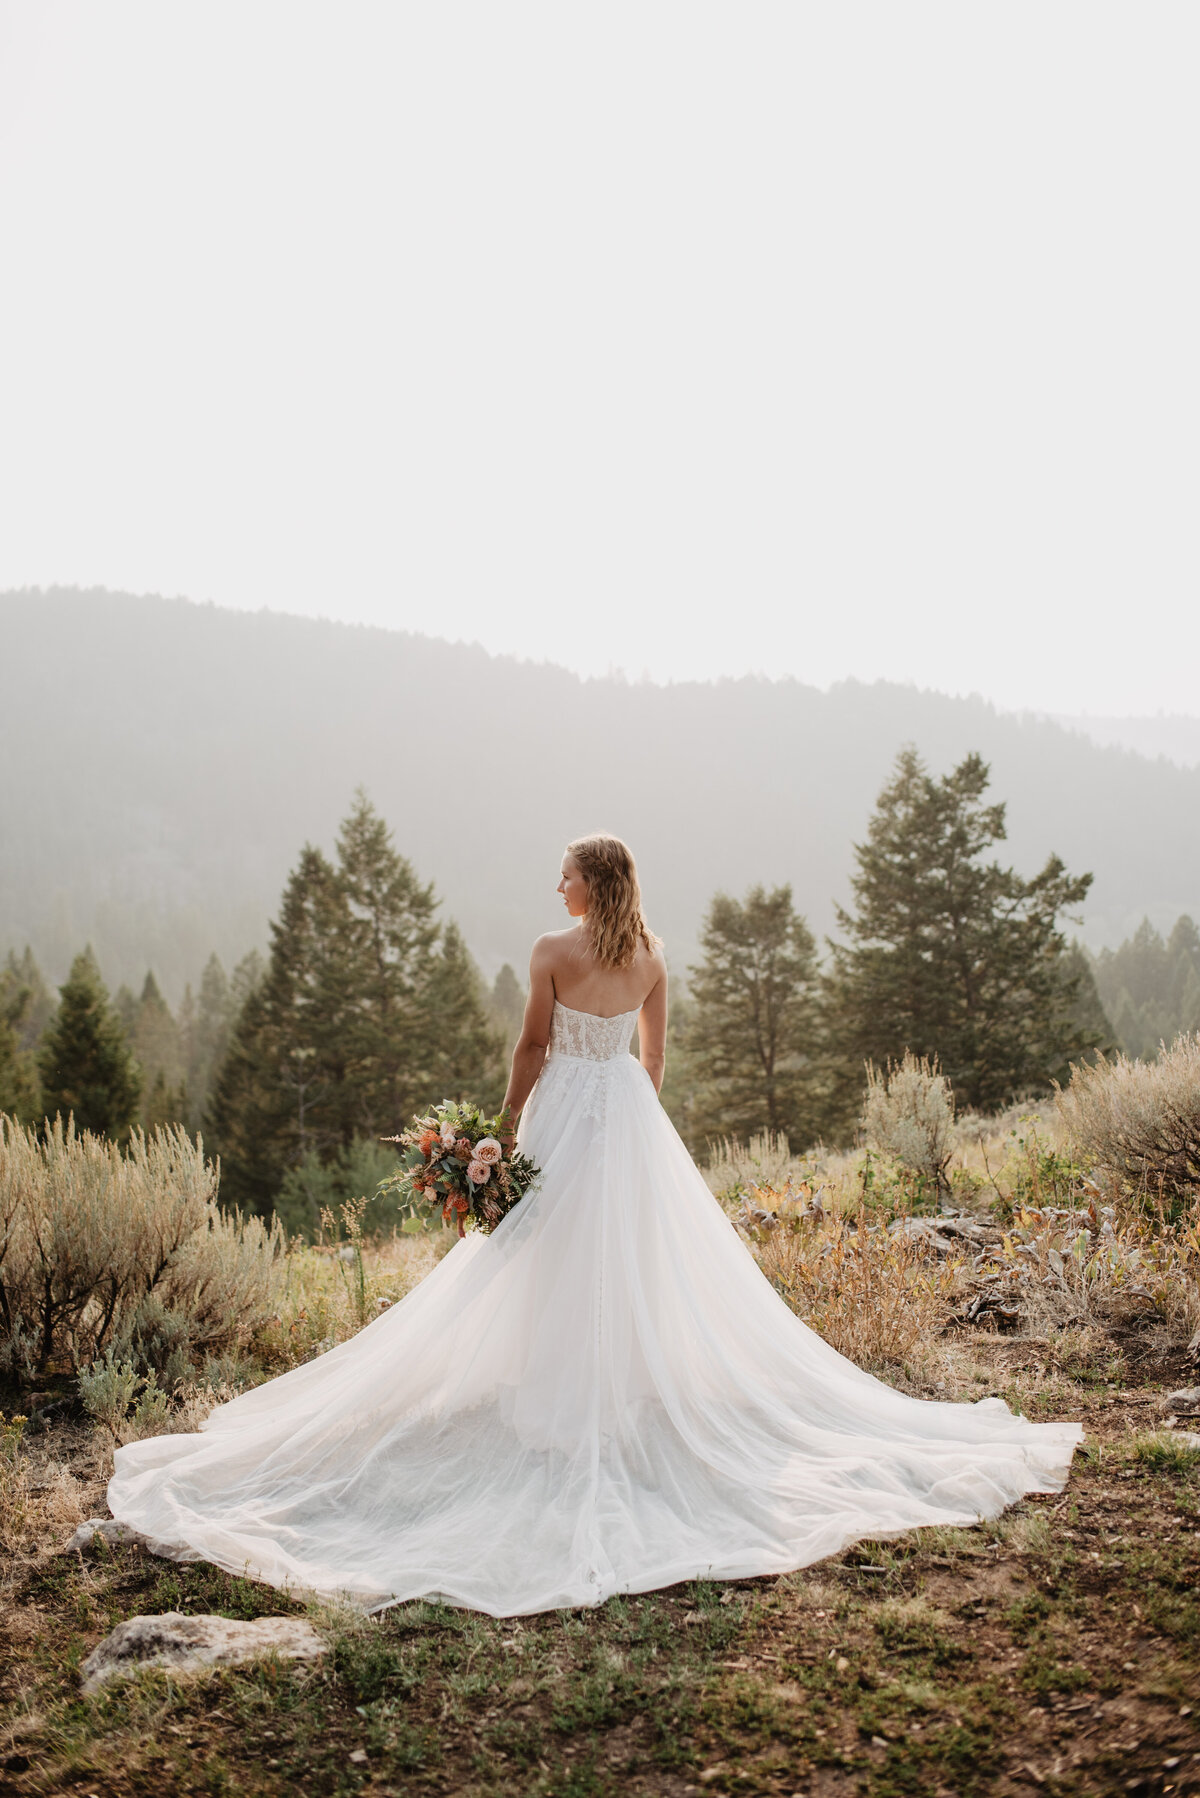 Jackson Hole Photographers capture bride's wedding dress train